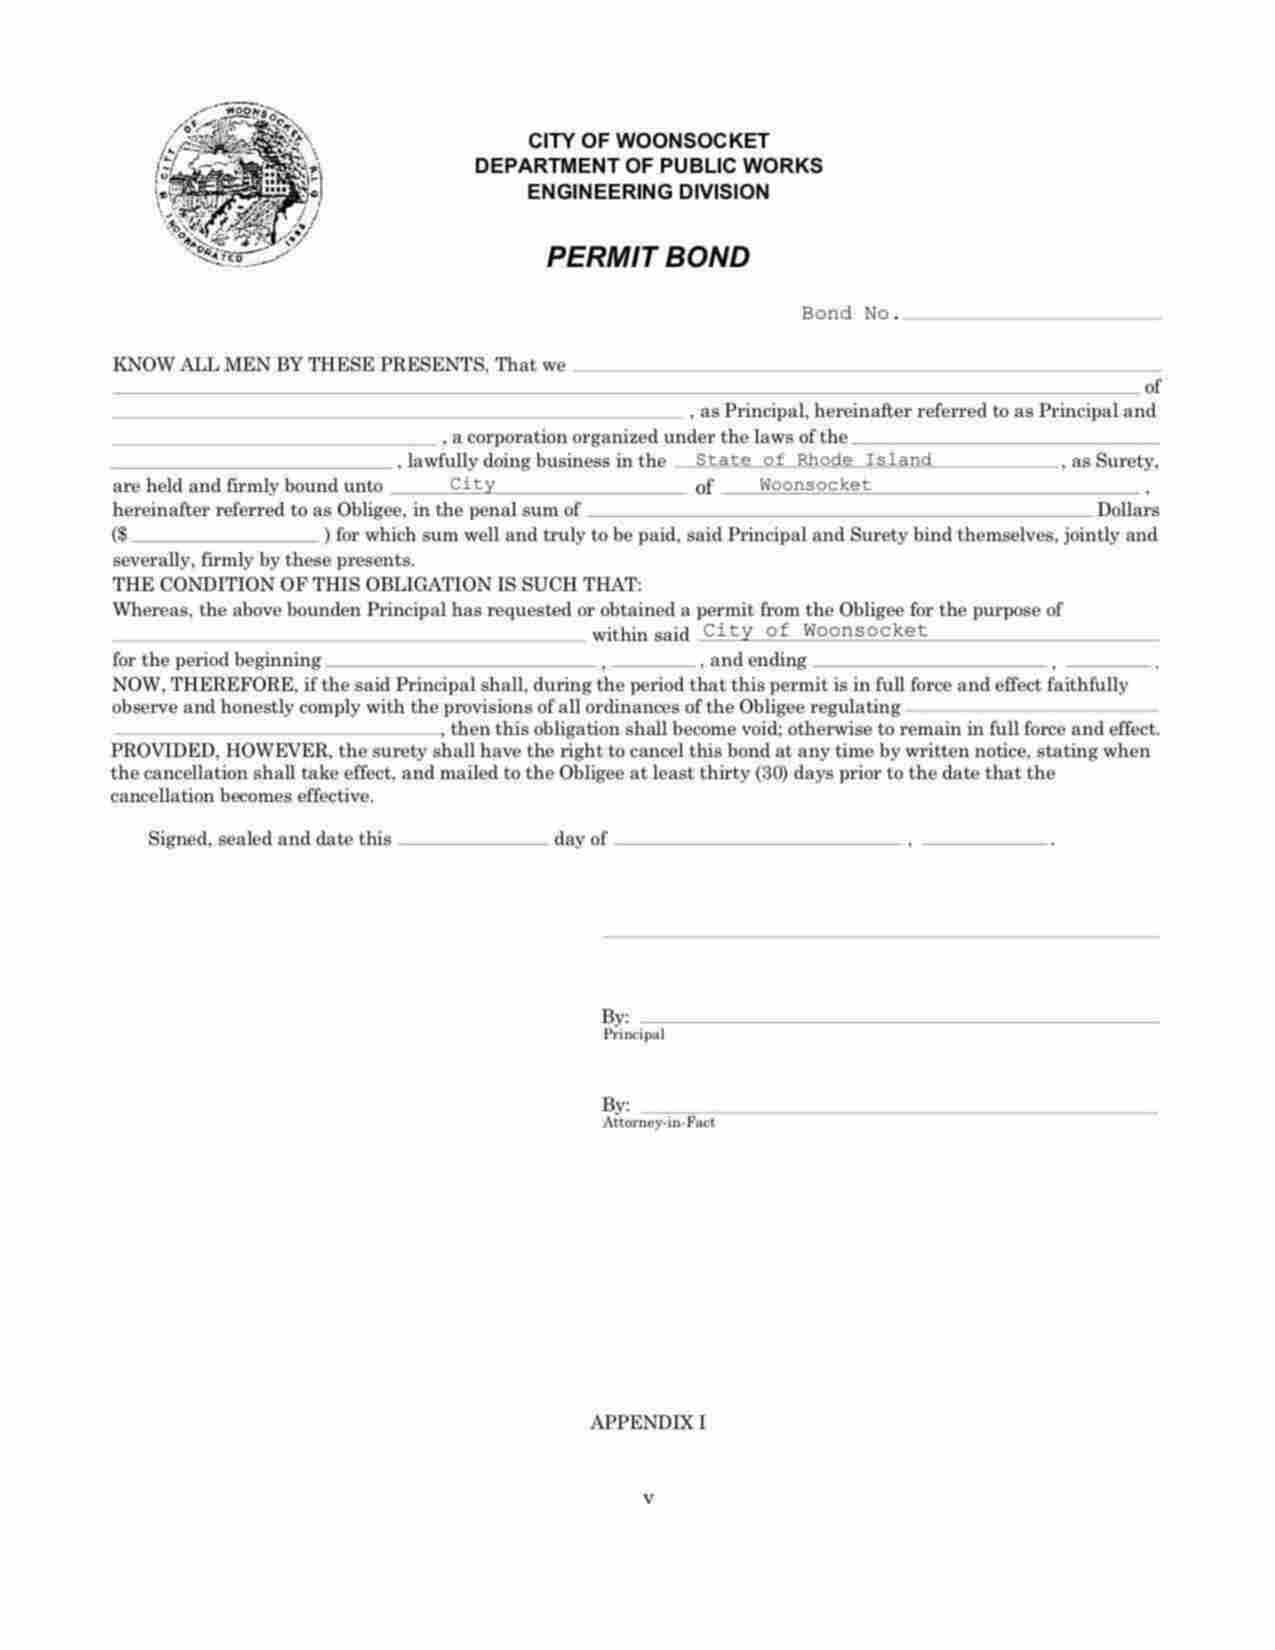 Rhode Island Permit Bond Form